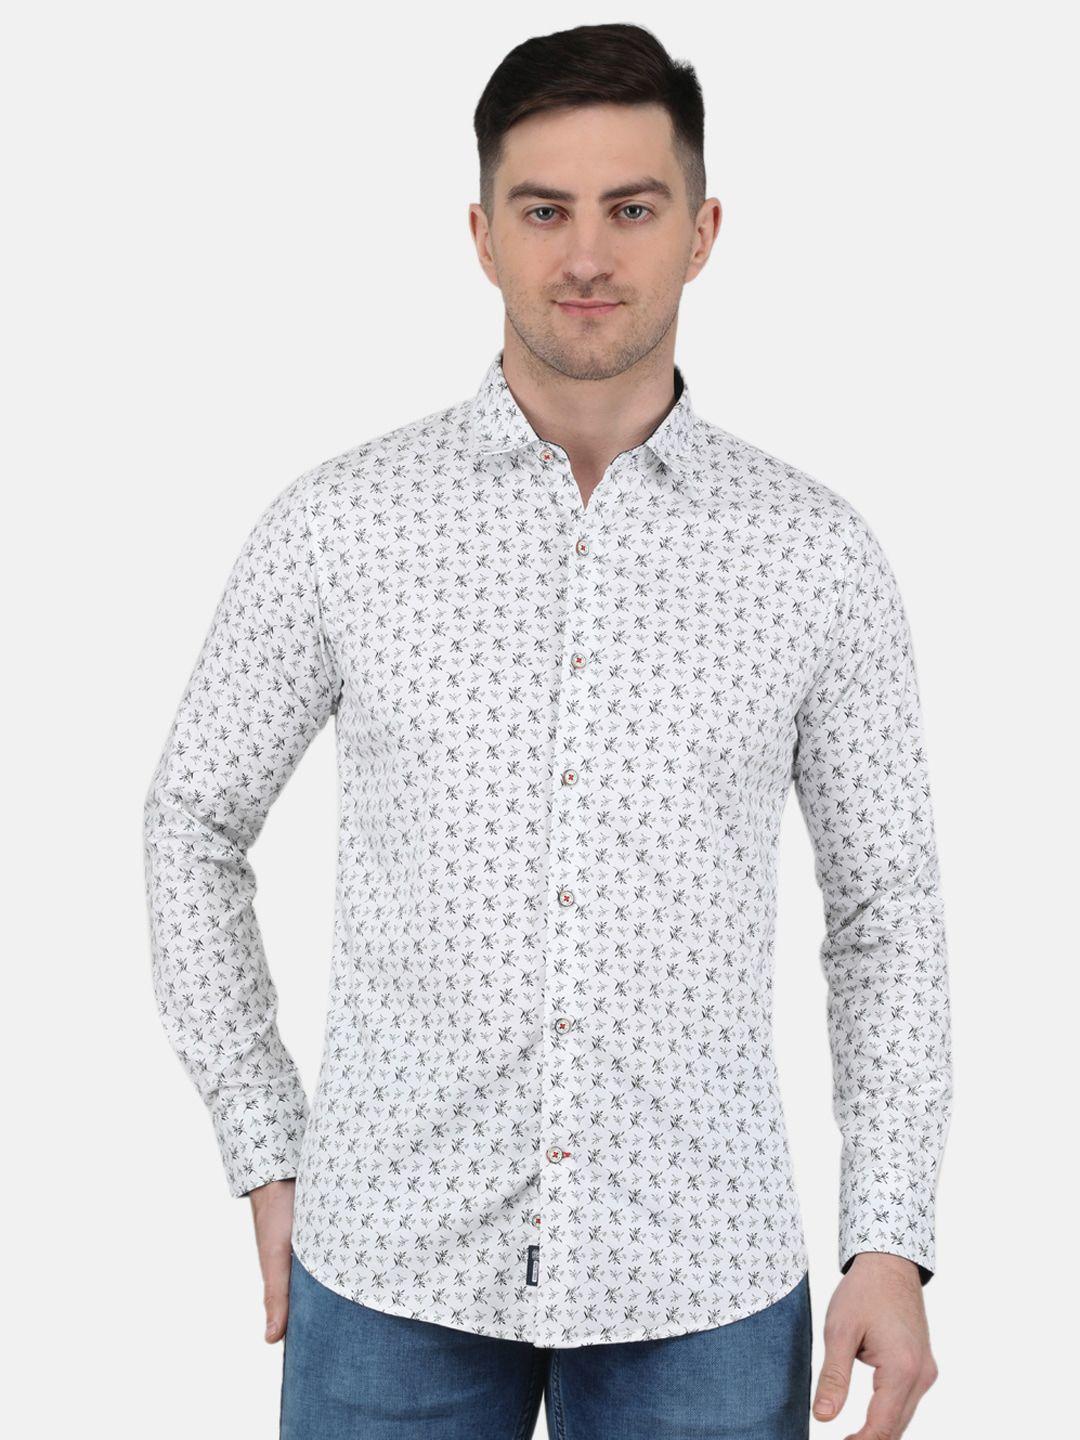 monte carlo straight floral printed spread collar cotton casual shirt